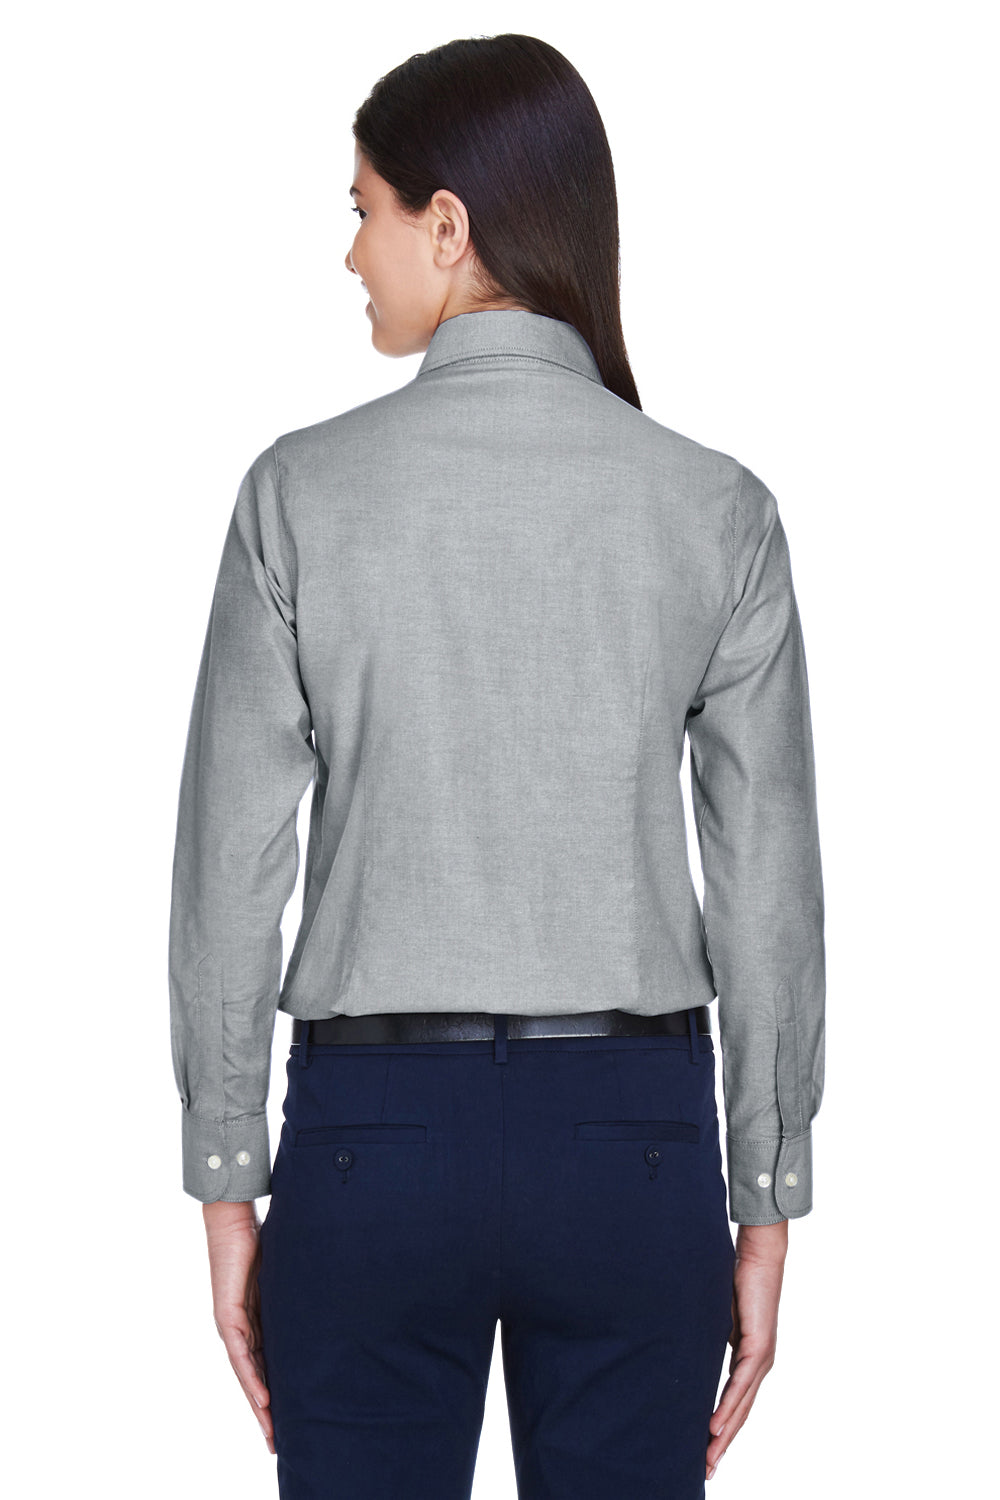 Harriton M600W Womens Oxford Wrinkle Resistant Long Sleeve Button Down Shirt Oxford Grey Back